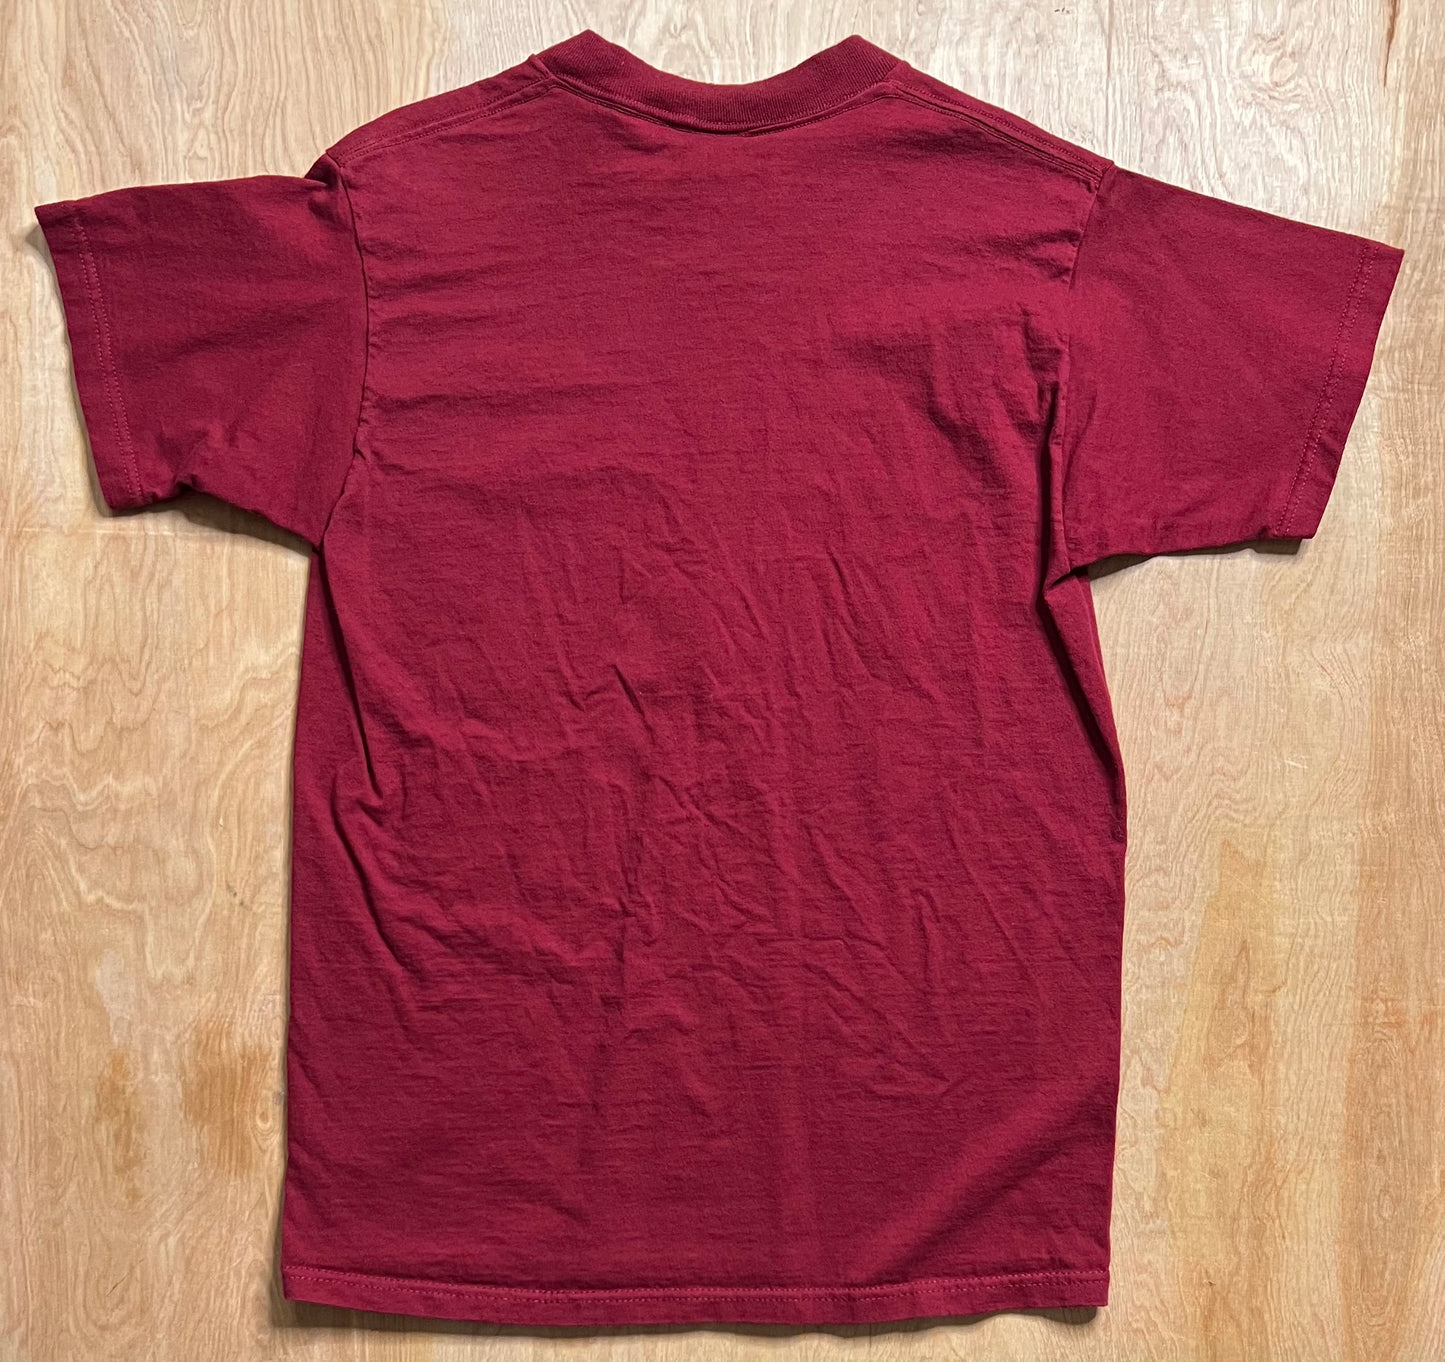 1995 Hot Air Expedition Phoenix, Arizona T-Shirt